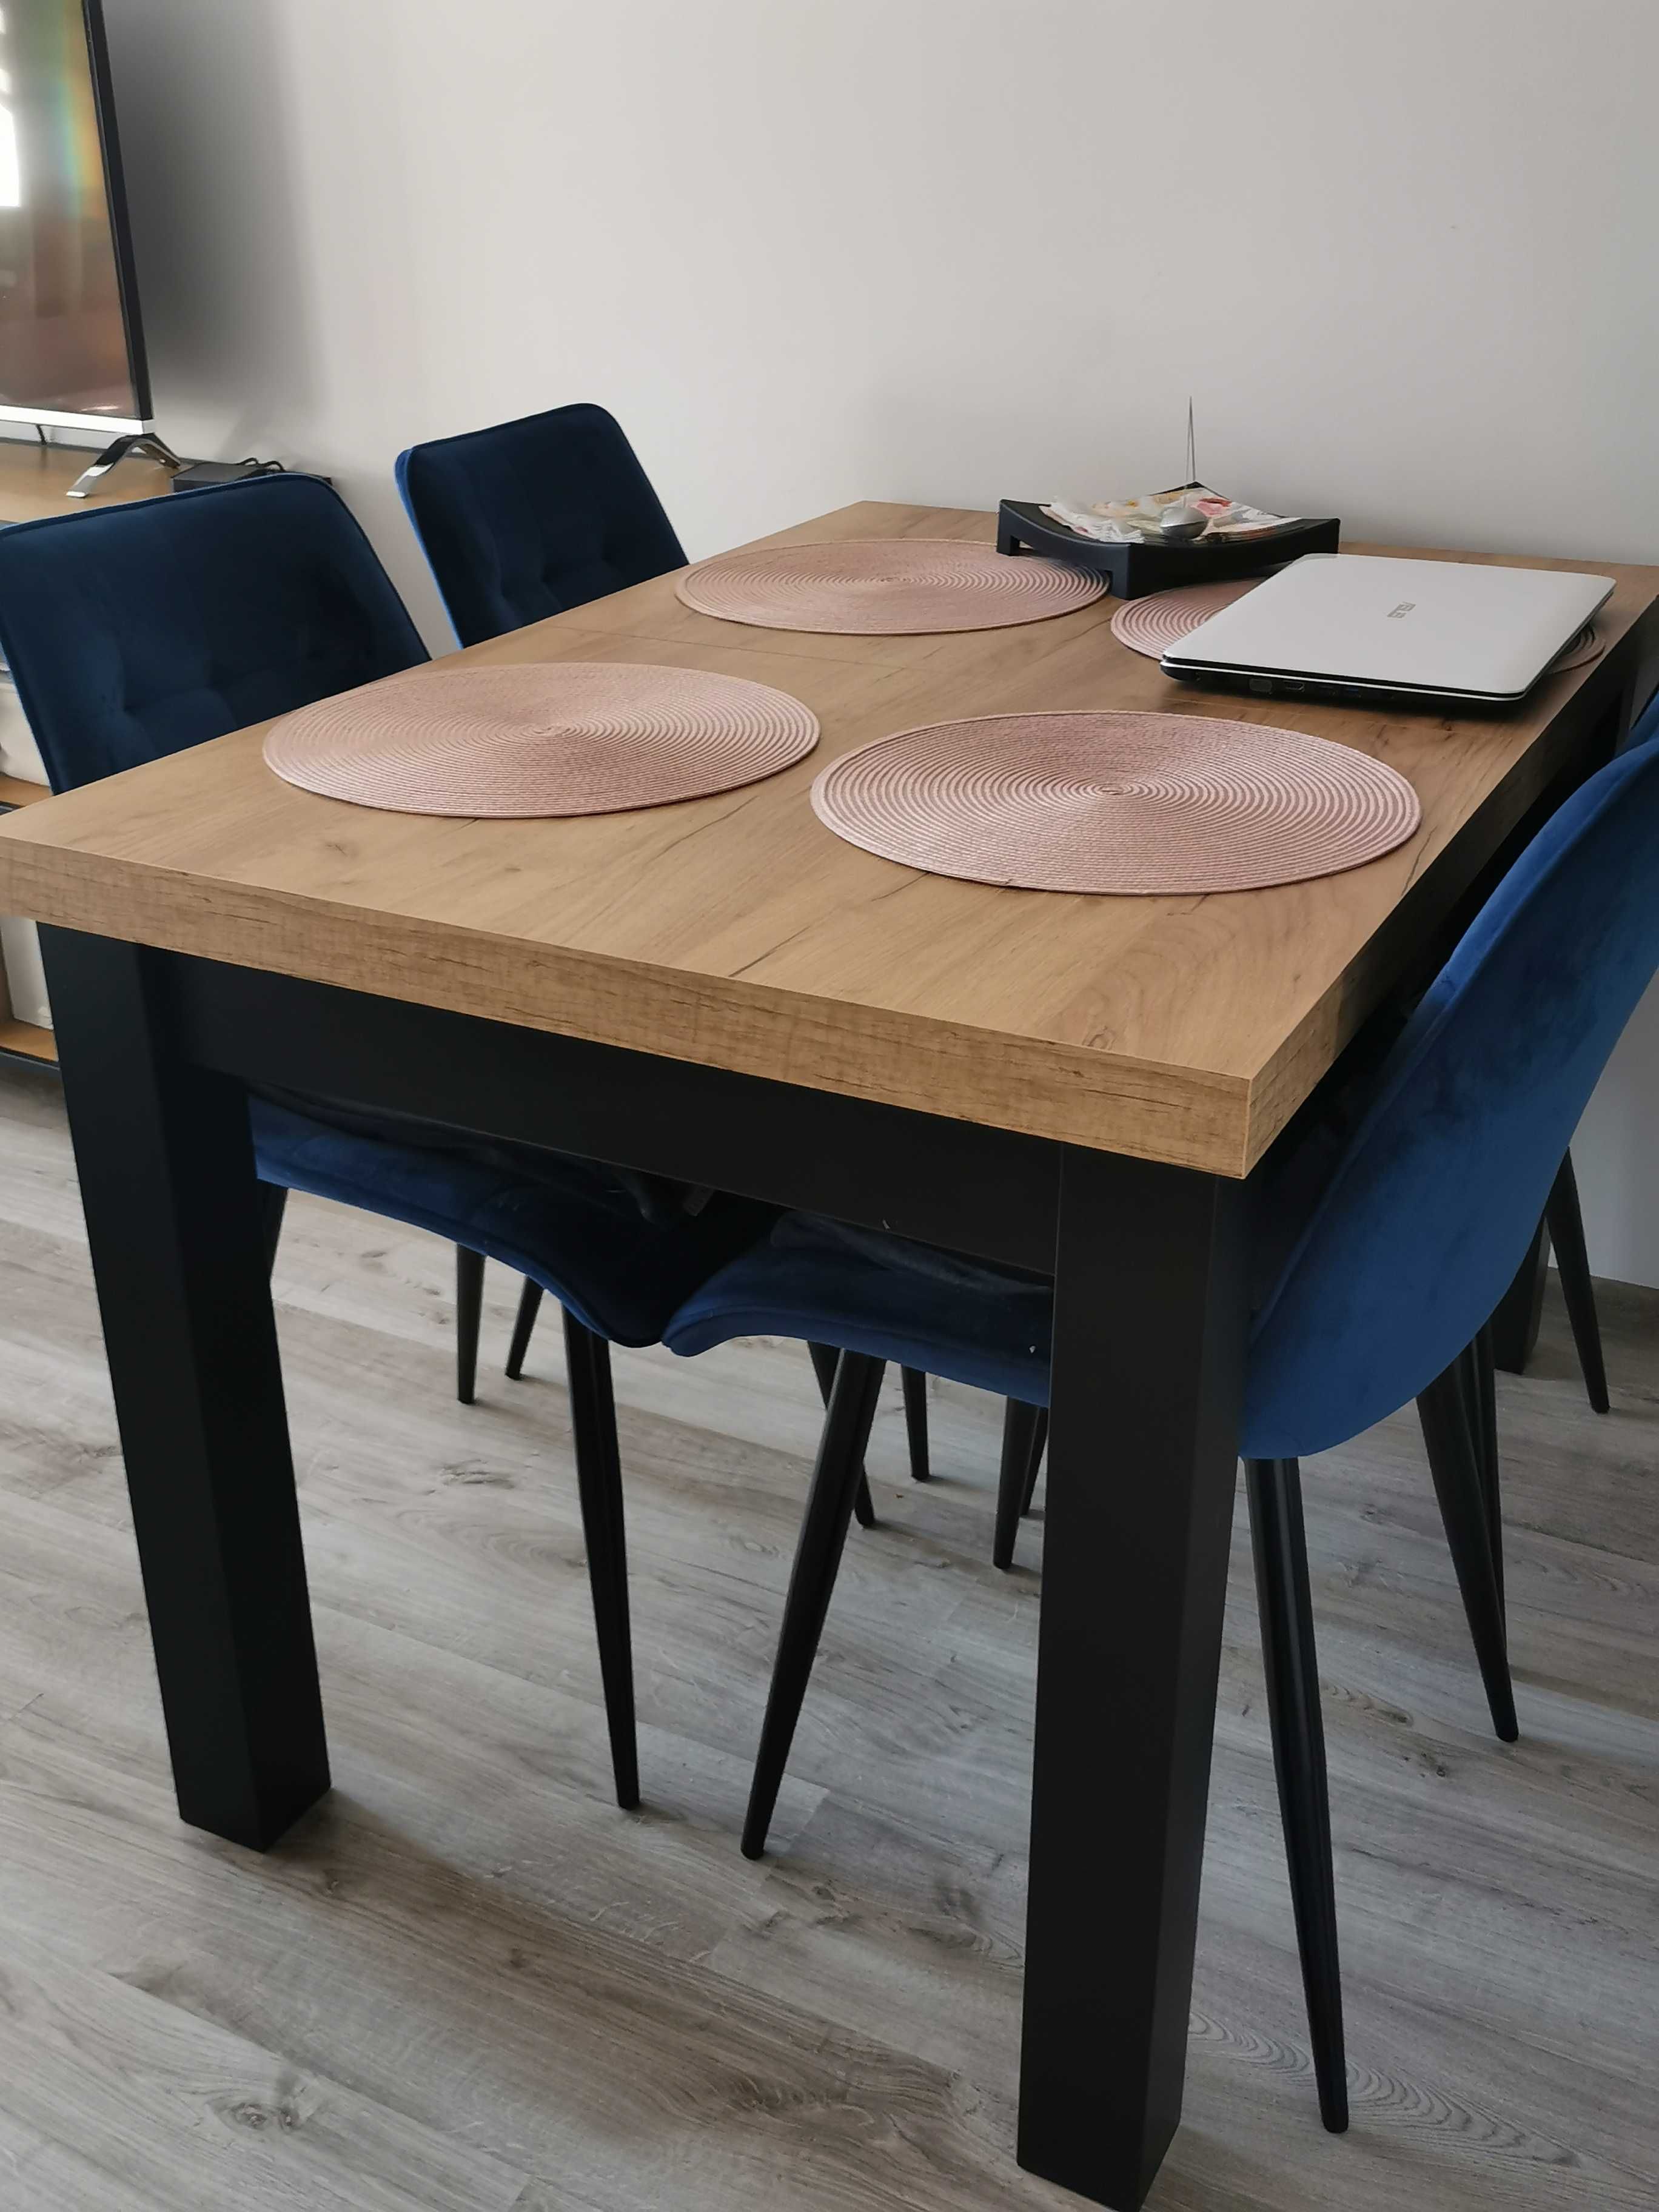 Meble stół krzesła komplet